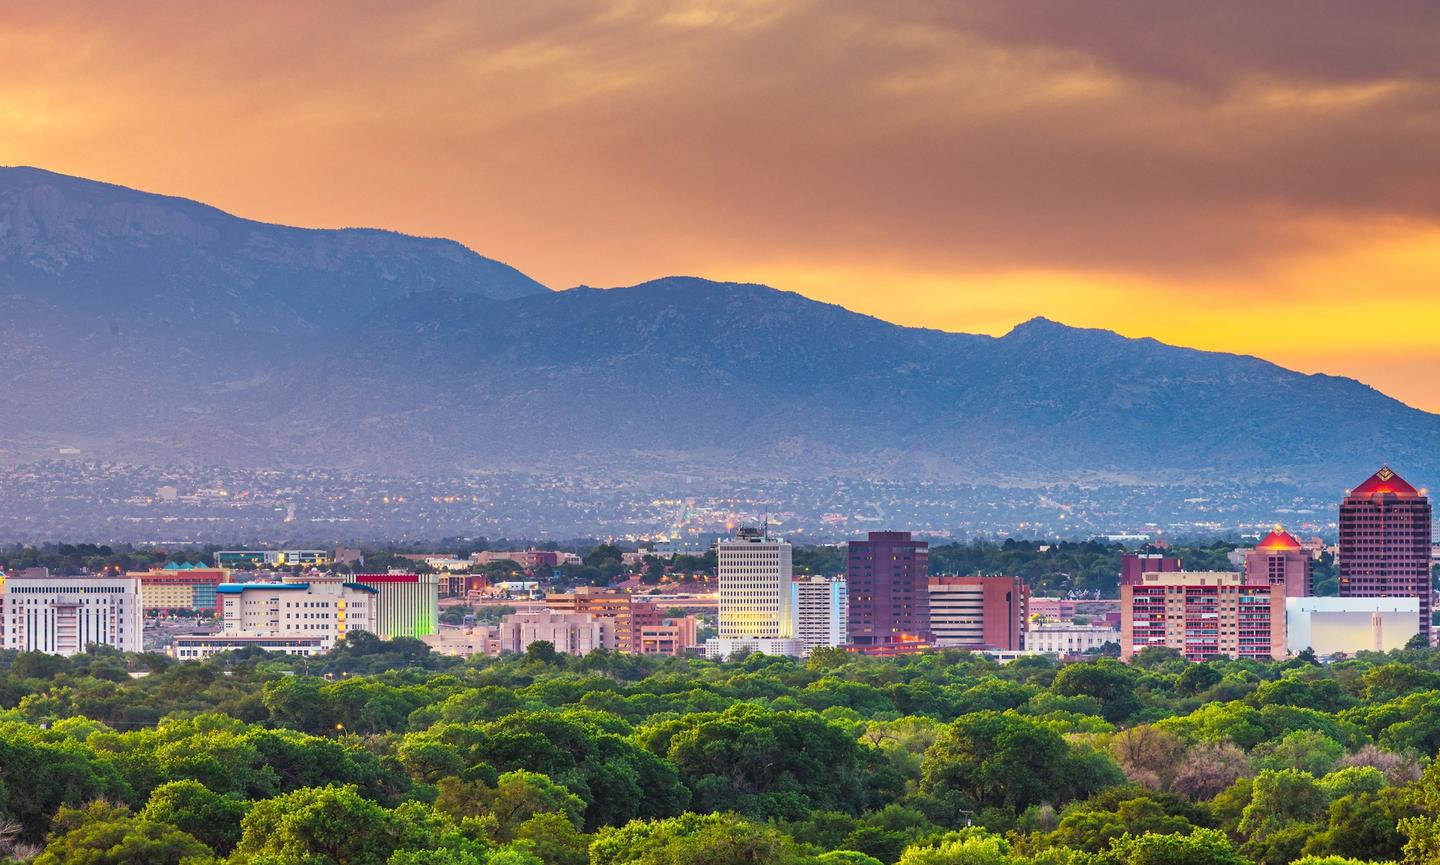 The Sandia Mountains provide a beautiful backdrop for the Albuquerque skyline.